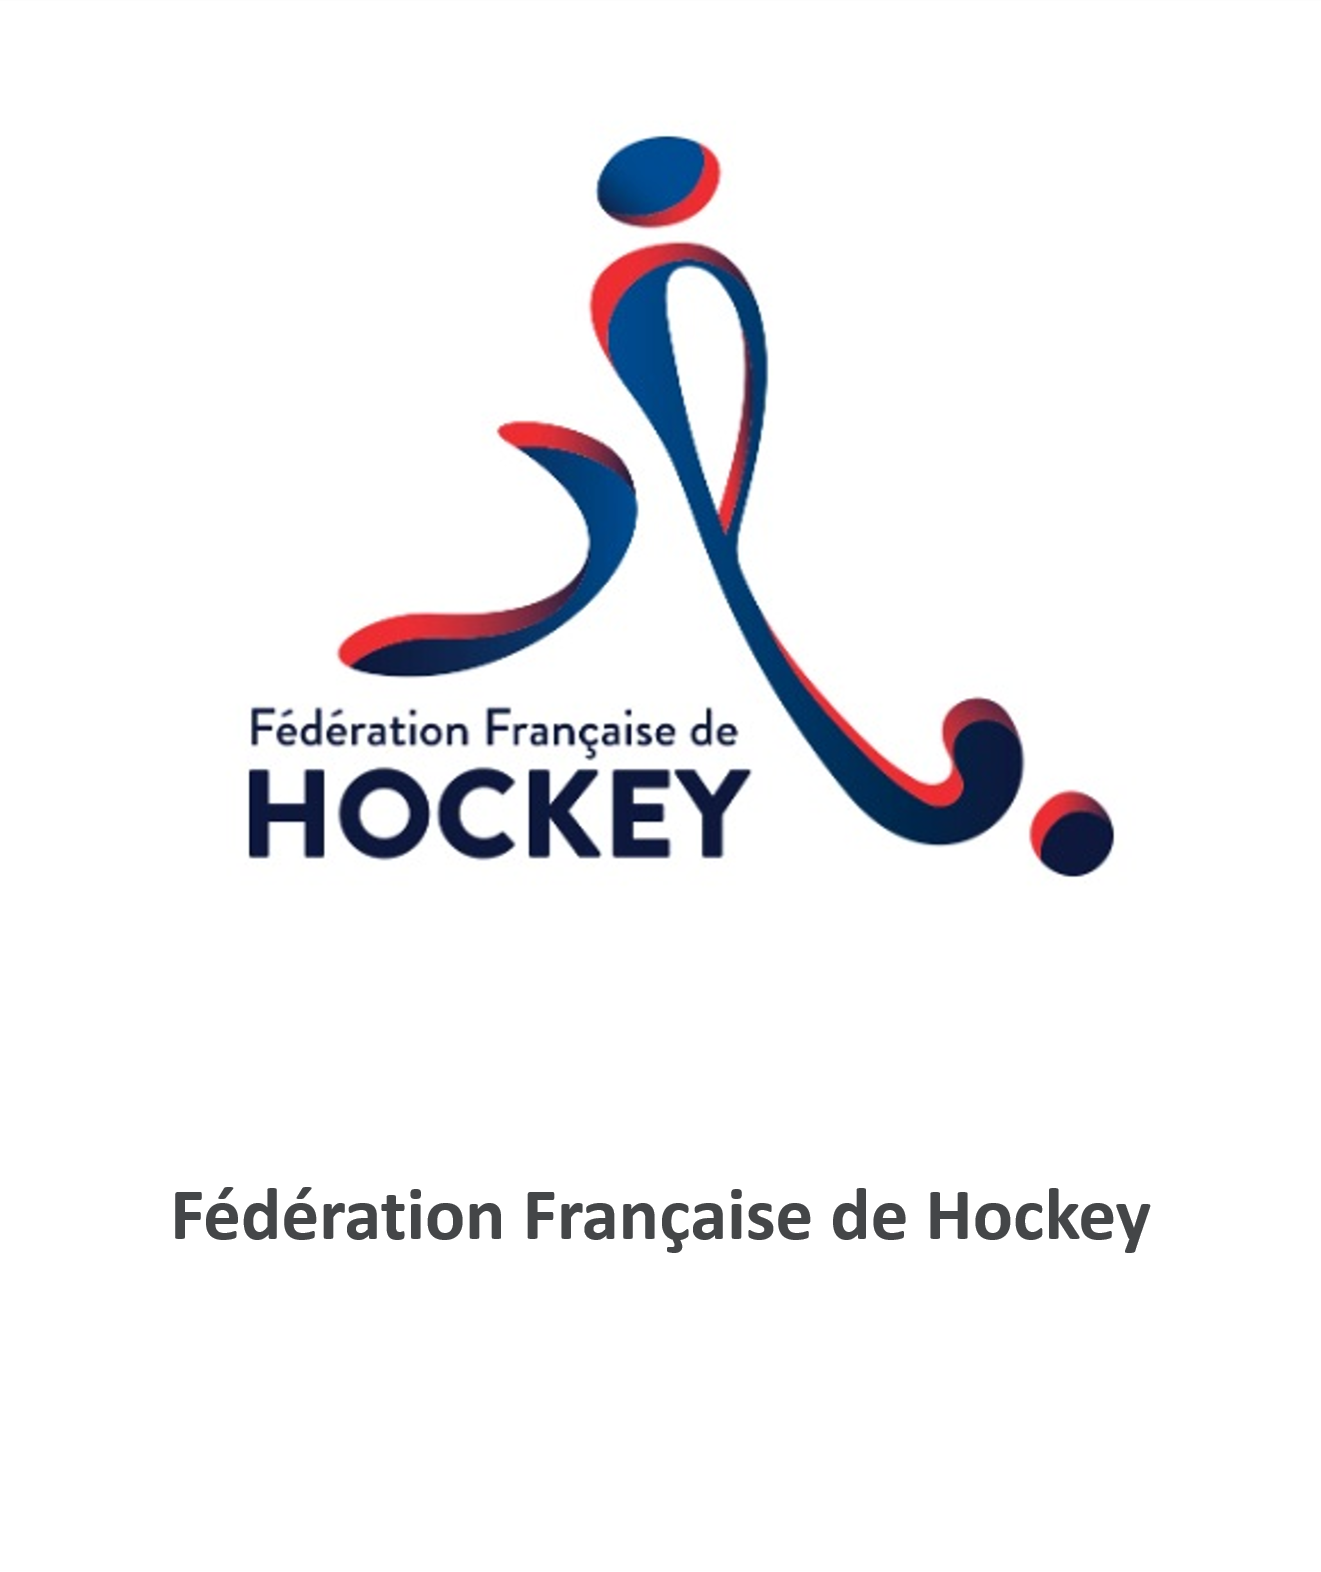 https://mclloyd.com/wp-content/uploads/2021/05/Federation-Francasie-de-Hockey-1.png